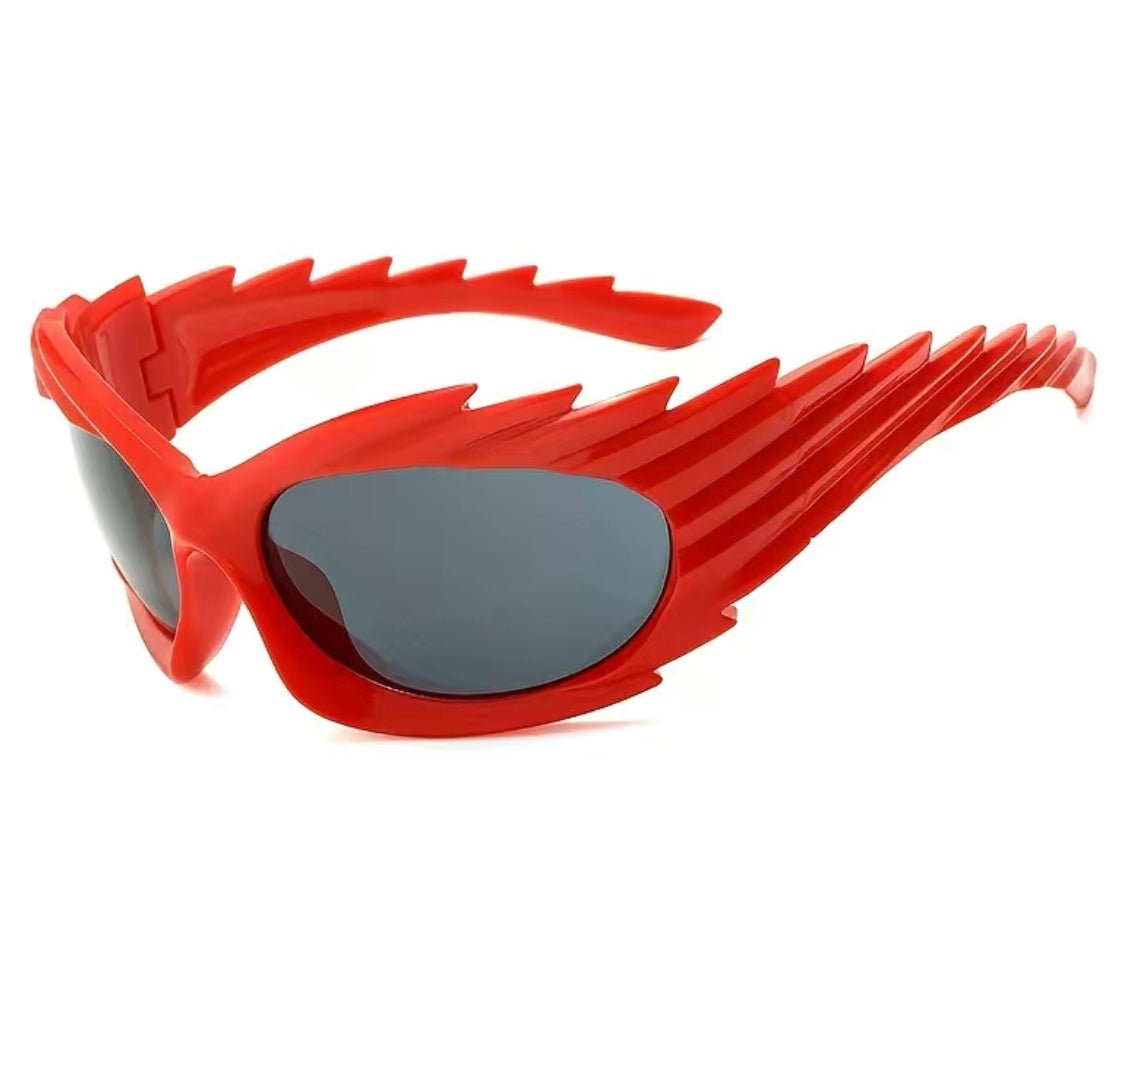 Space Face (red) Sunglasses - Pretty Prissy Pieces sunglasses